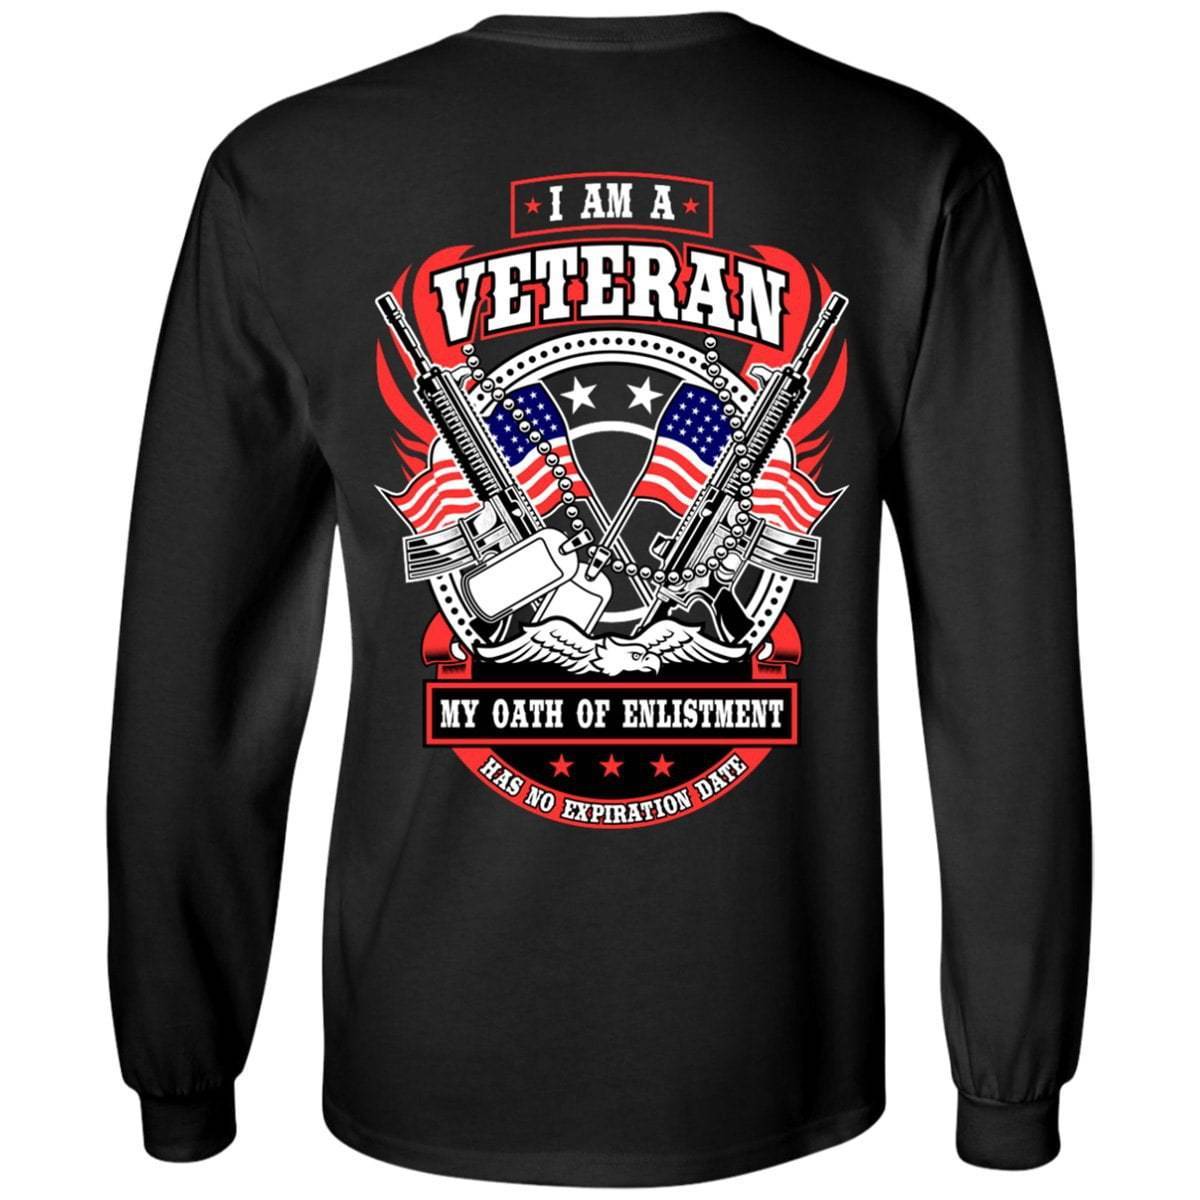 I Am A Veteran T-Shirt, Cotton, Black